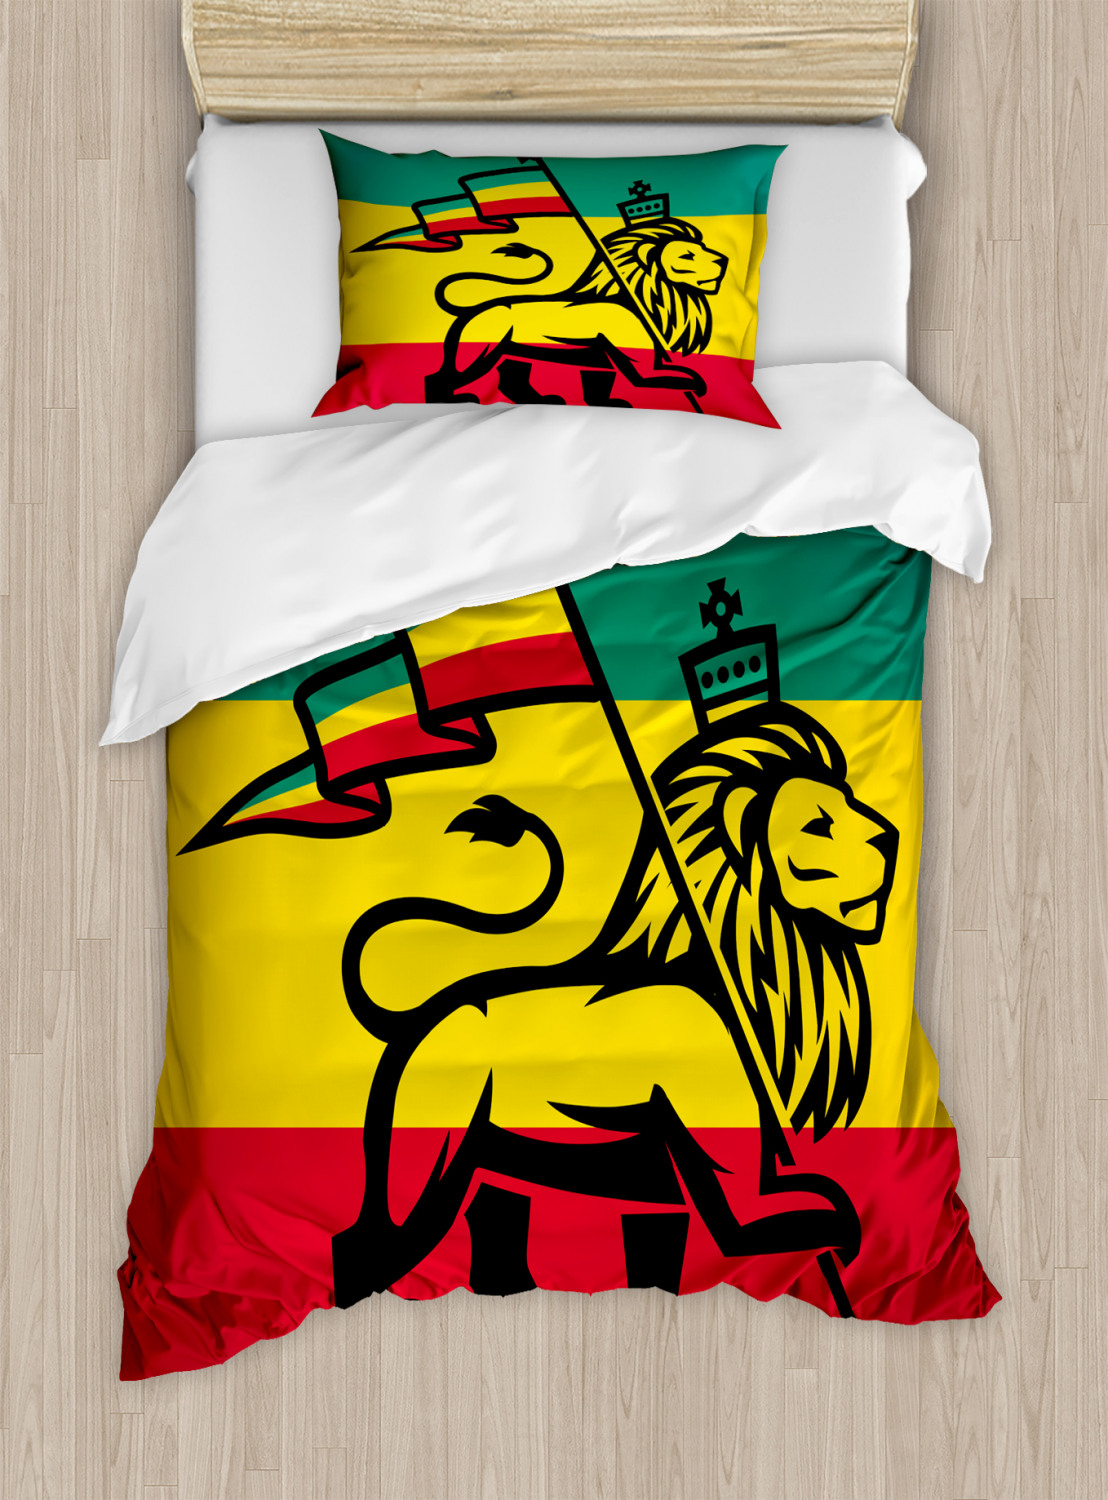 Rasta Duvet Cover Set With Pillow Shams Judah Lion Rastafari Flag